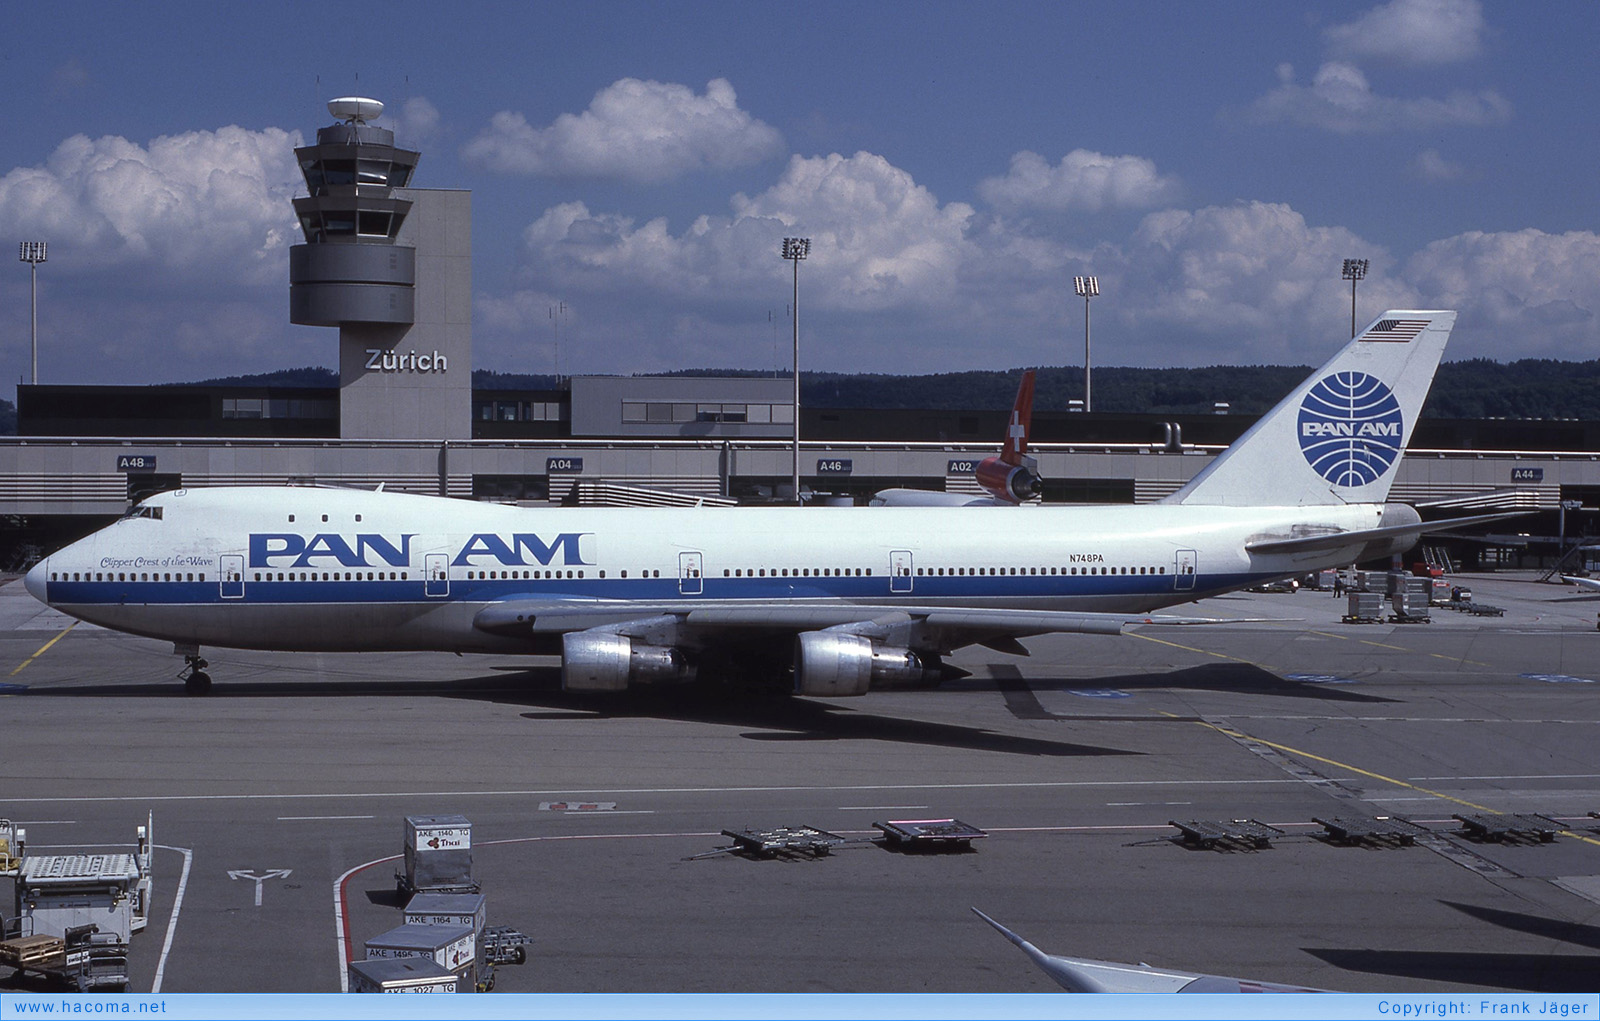 Photo of N748PA - Pan Am Clipper Hornet / Crest of the Wave - Zurich International Airport - Jul 30, 1988